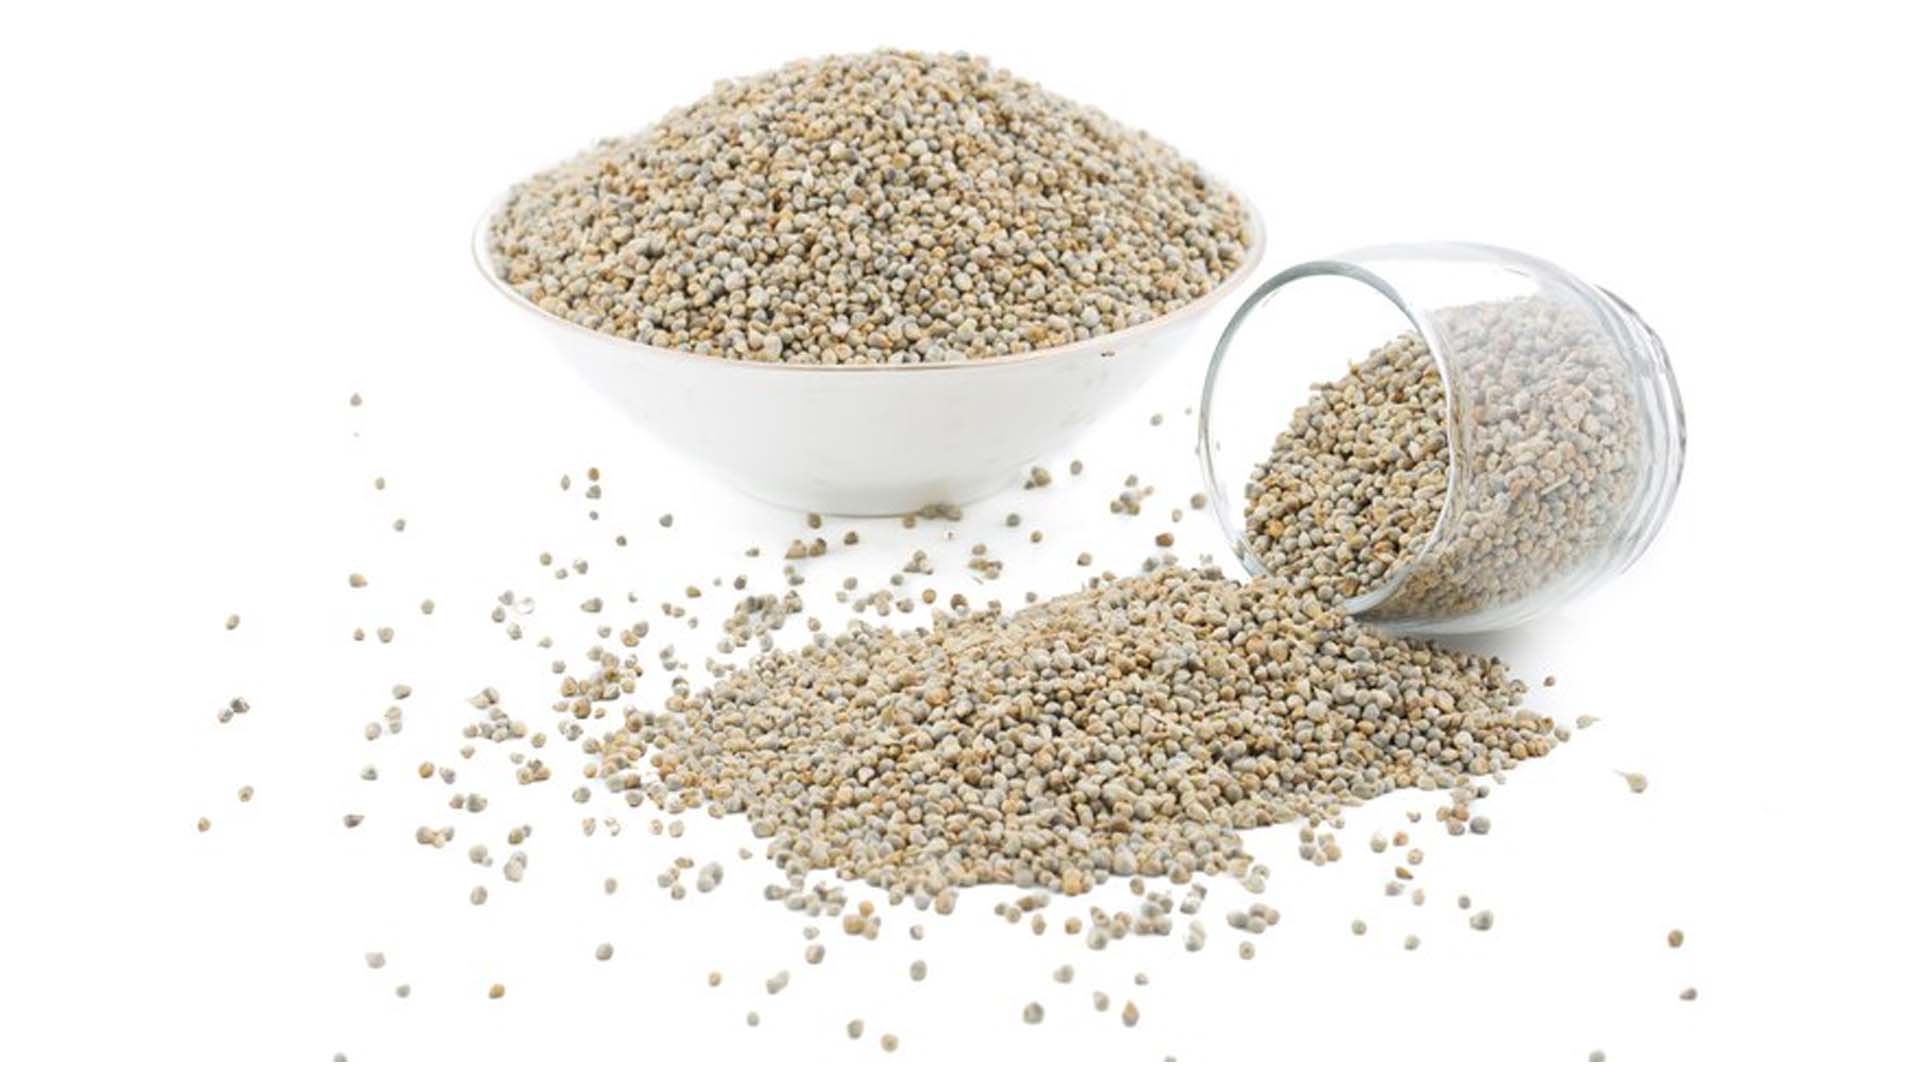 Bajra/Pearl Millet Nutrition